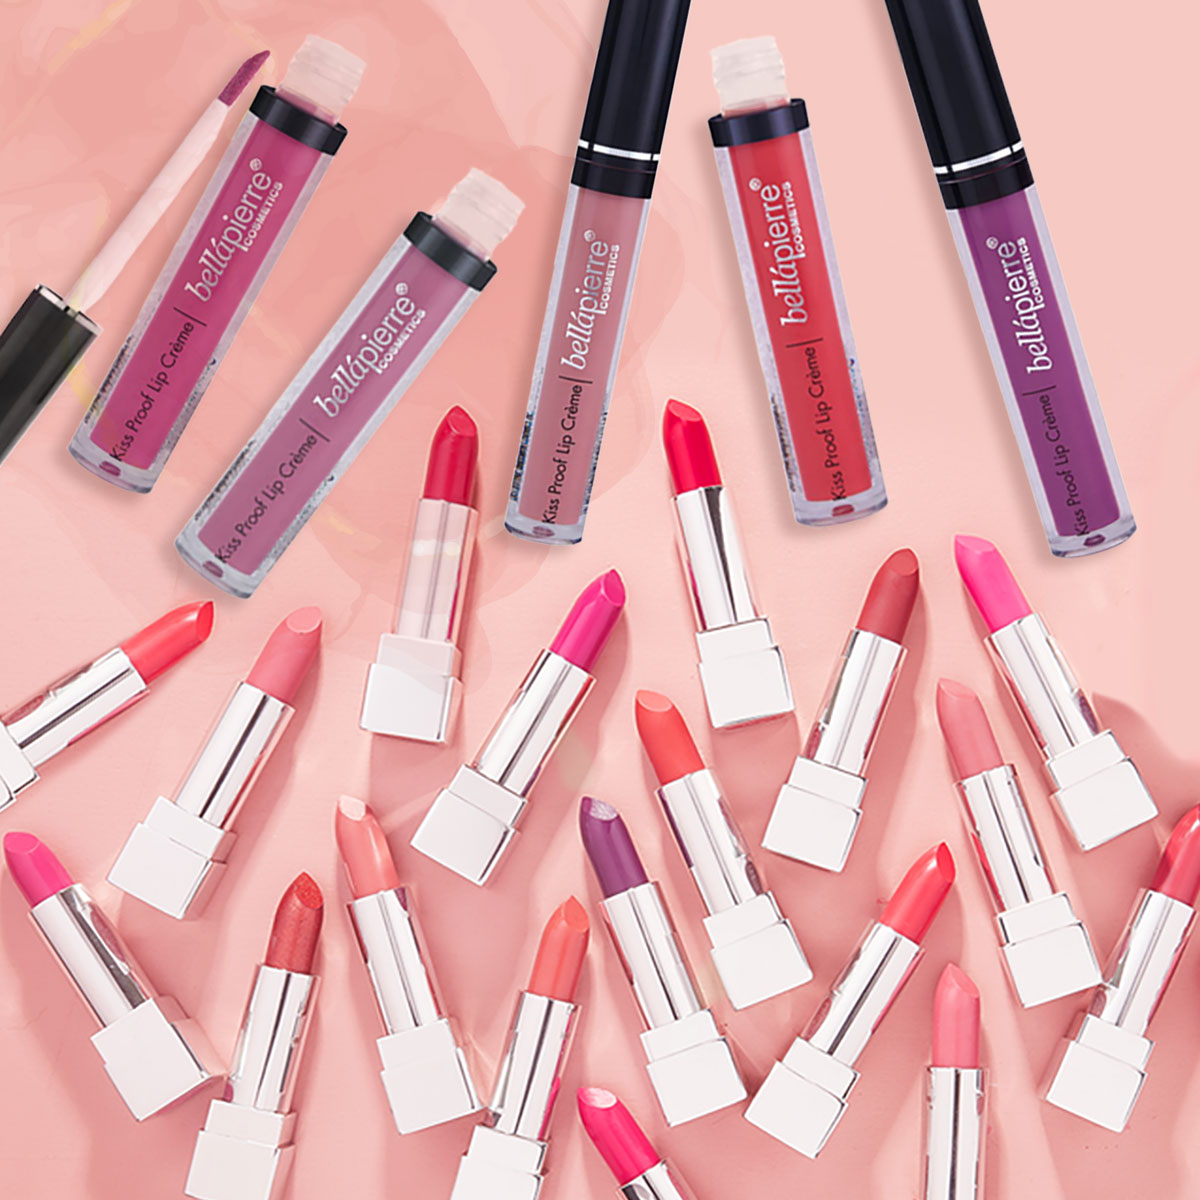 Choosing the Right Lipstick Formula